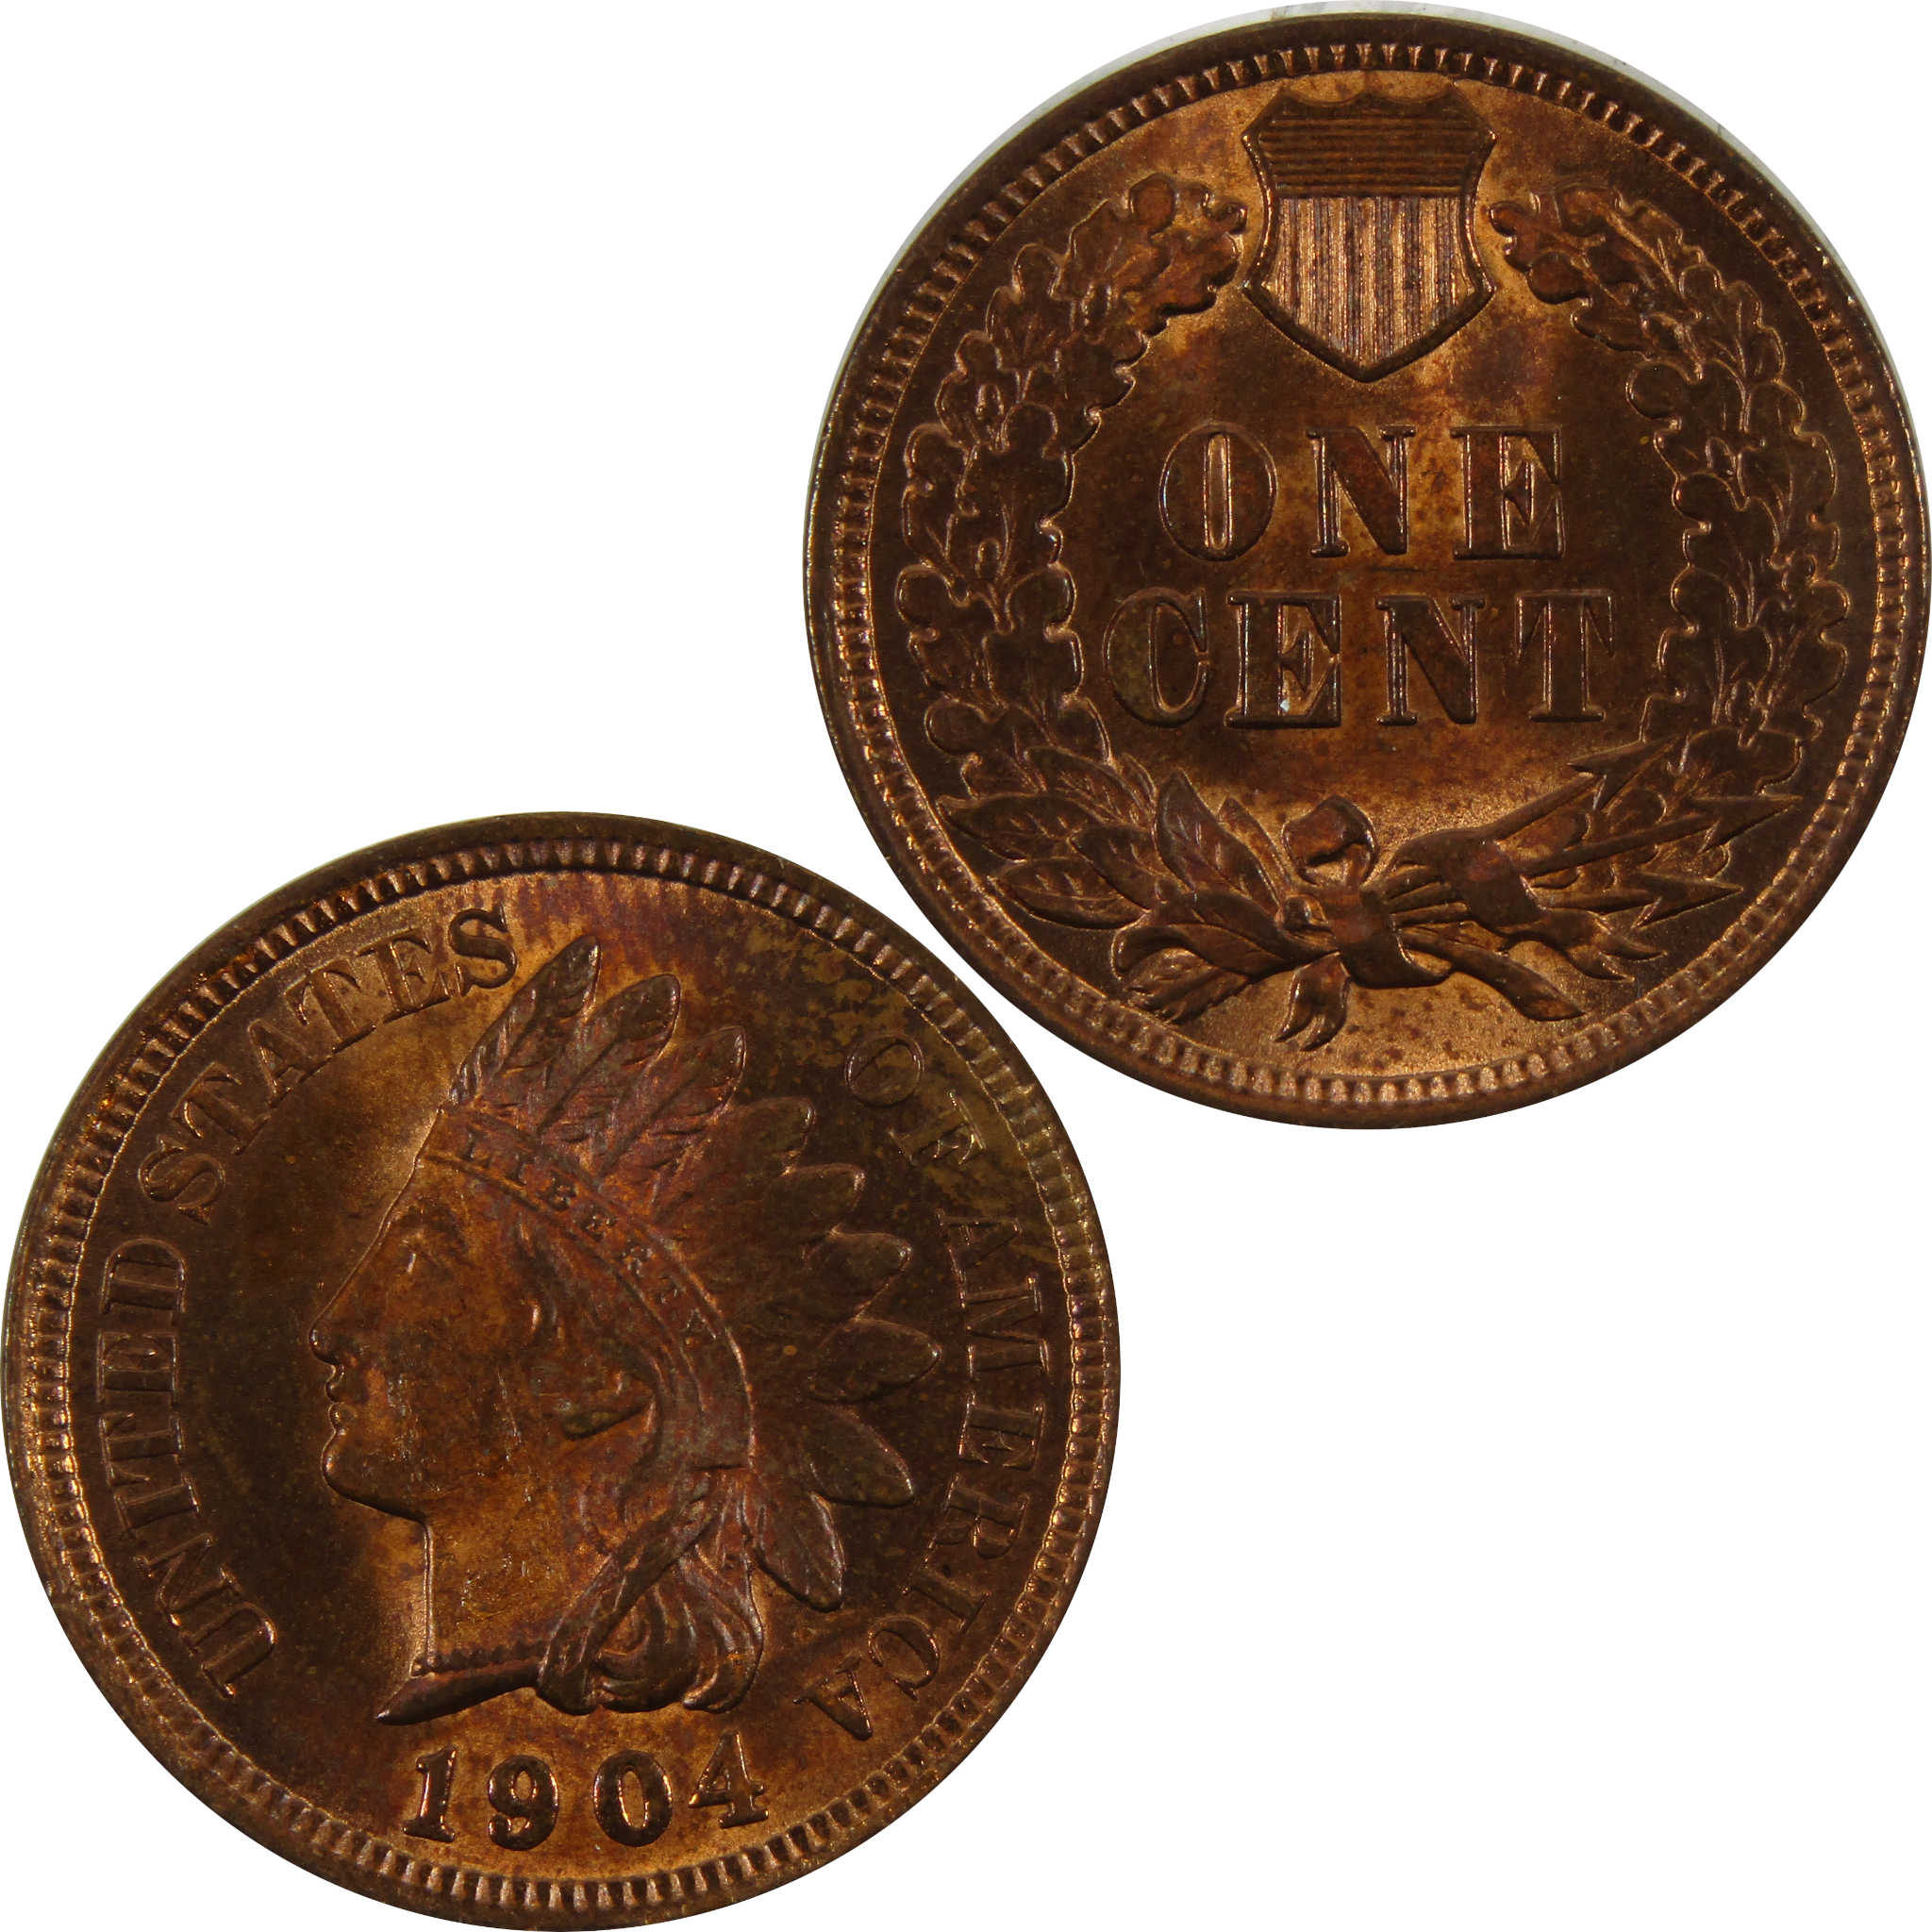 1904 Indian Head Cent BU Choice Uncirculated Penny 1c Coin SKU:I7684